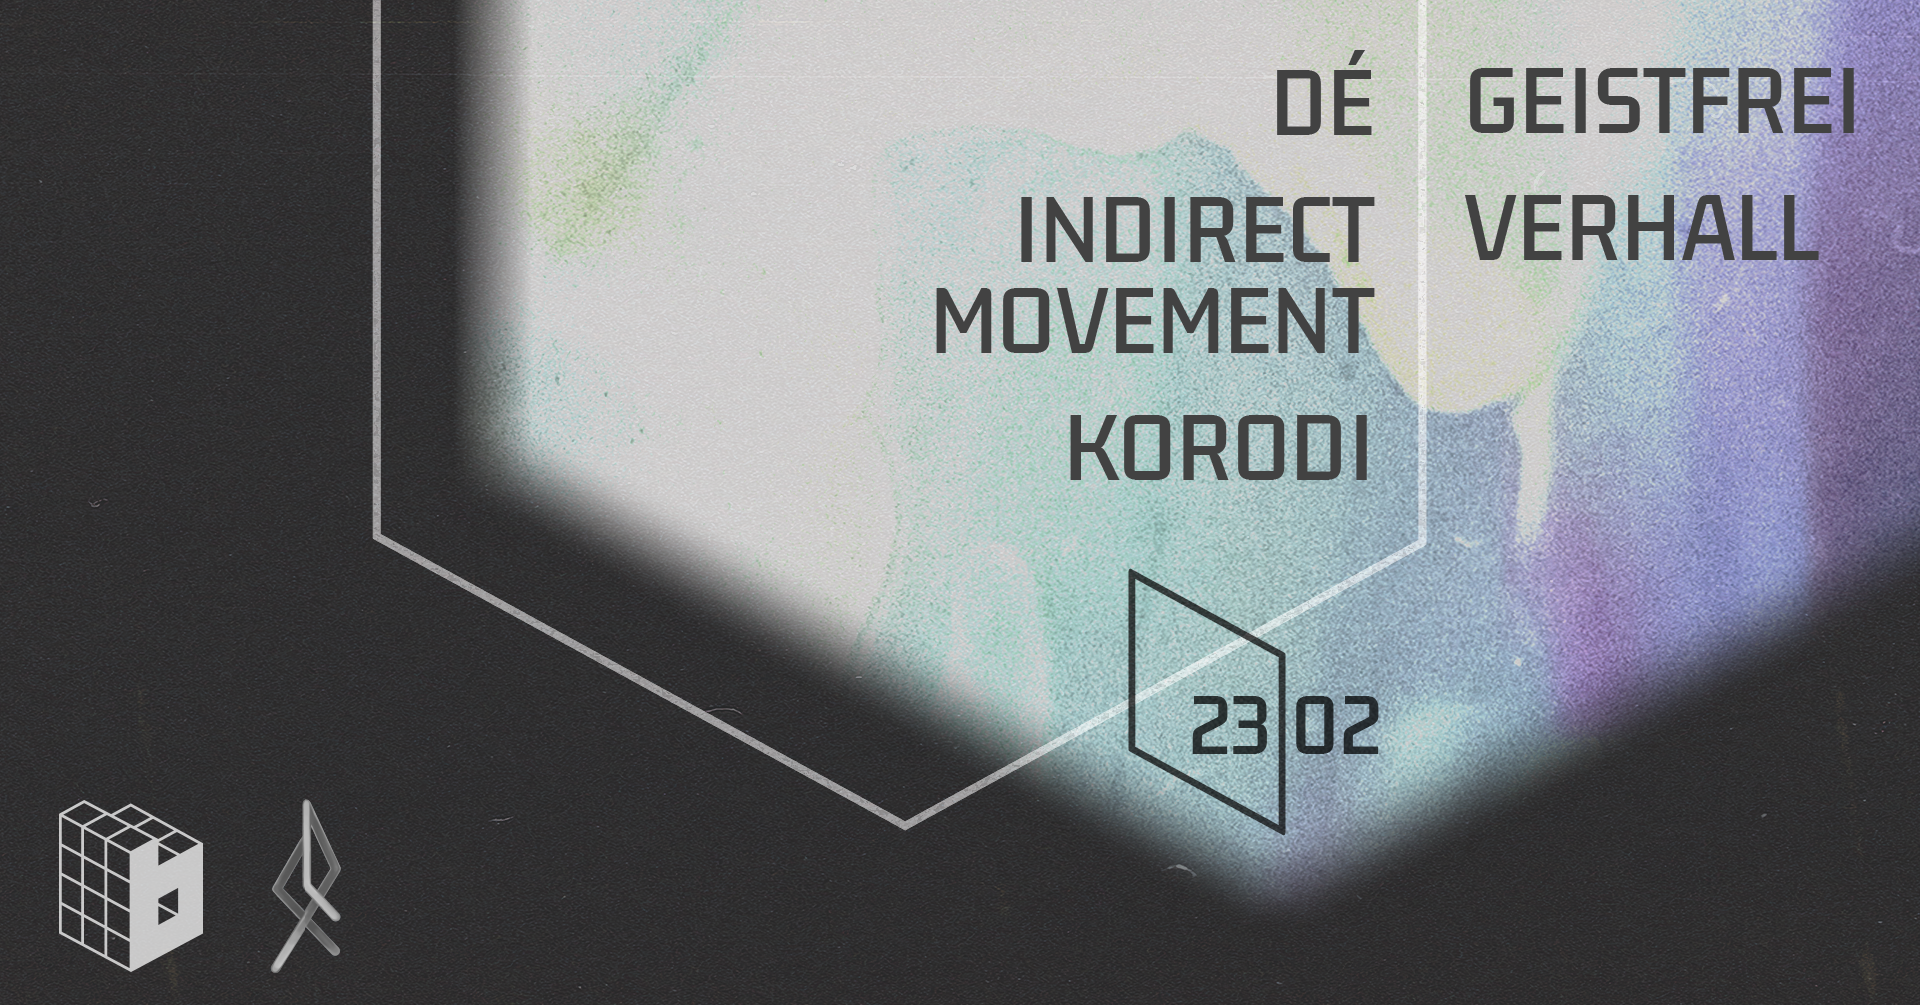 Bloc x Qualia with Dé, GEISTFREI, Indirect Movement, Korodi, Verhall - Página frontal